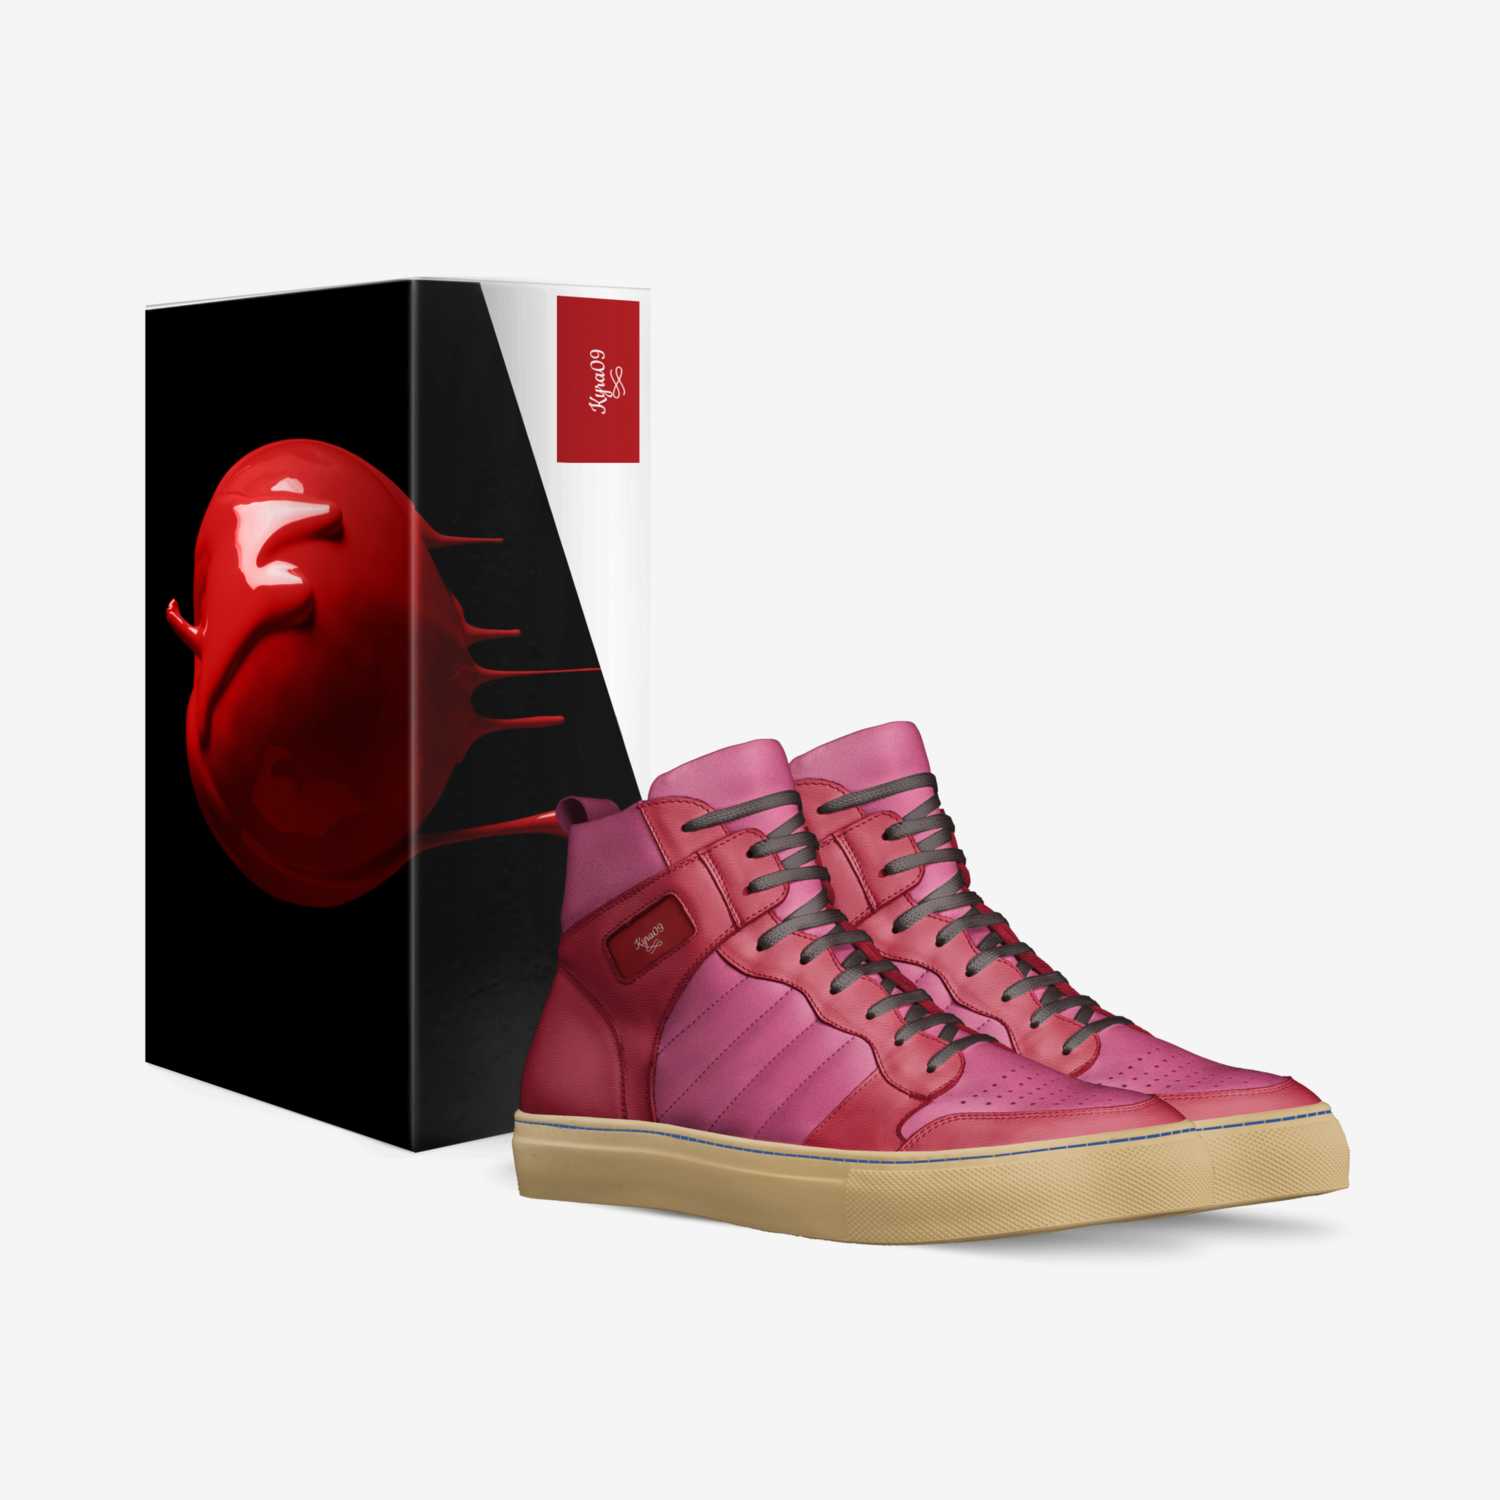 Kyra09 custom made in Italy shoes by Montesha Gatlin | Box view